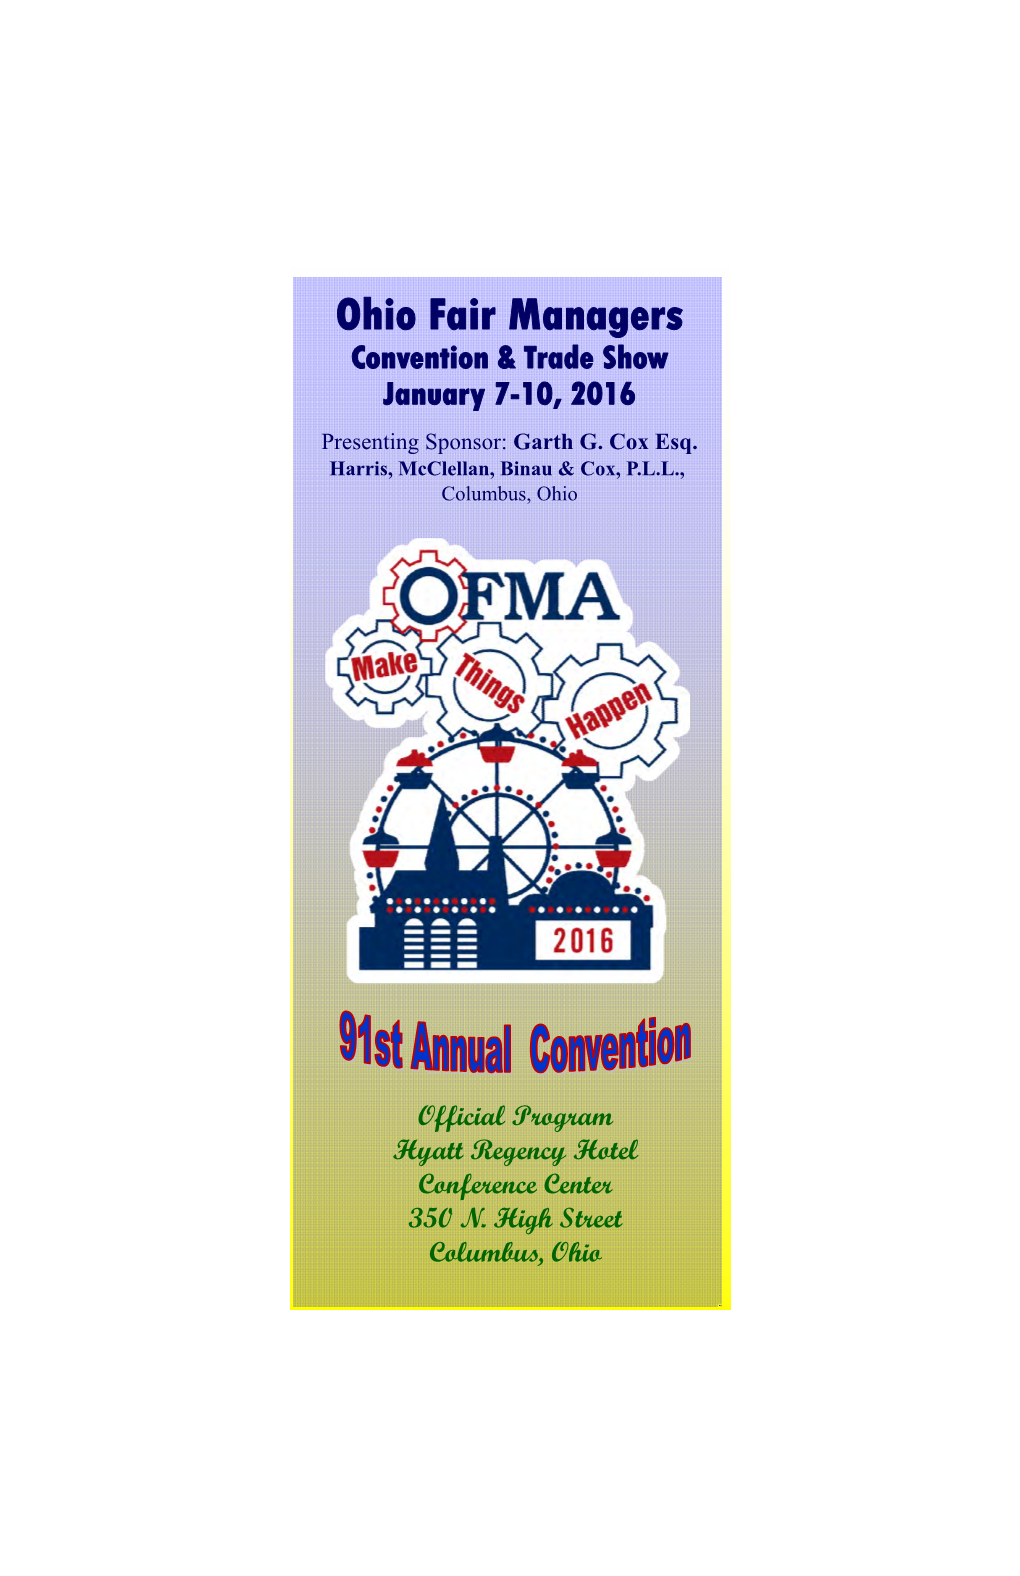 Ohio Fair Managers Convention & Trade Show January 7-10, 2016 Presenting Sponsor: Garth G